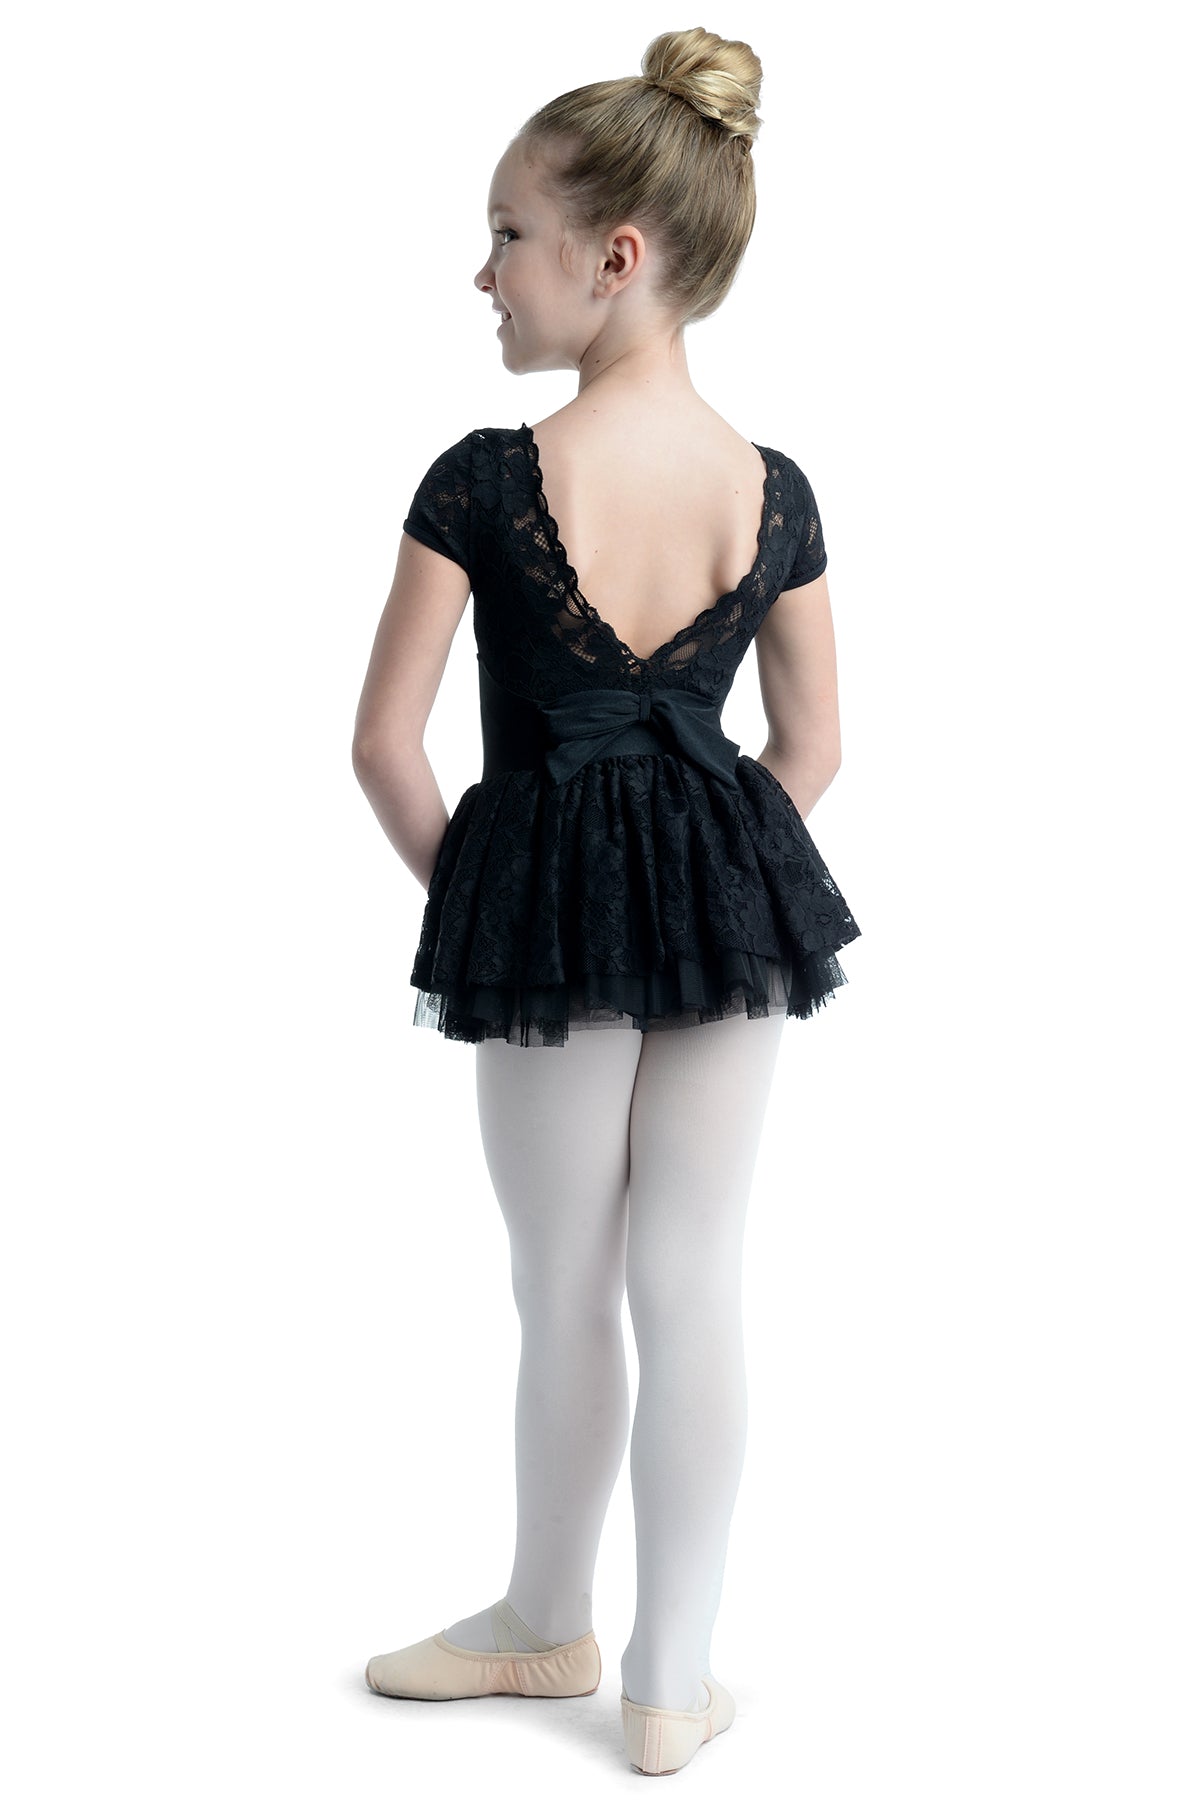 Dance Tutu Skirt | Lace Scalloped Top | Danznmotion